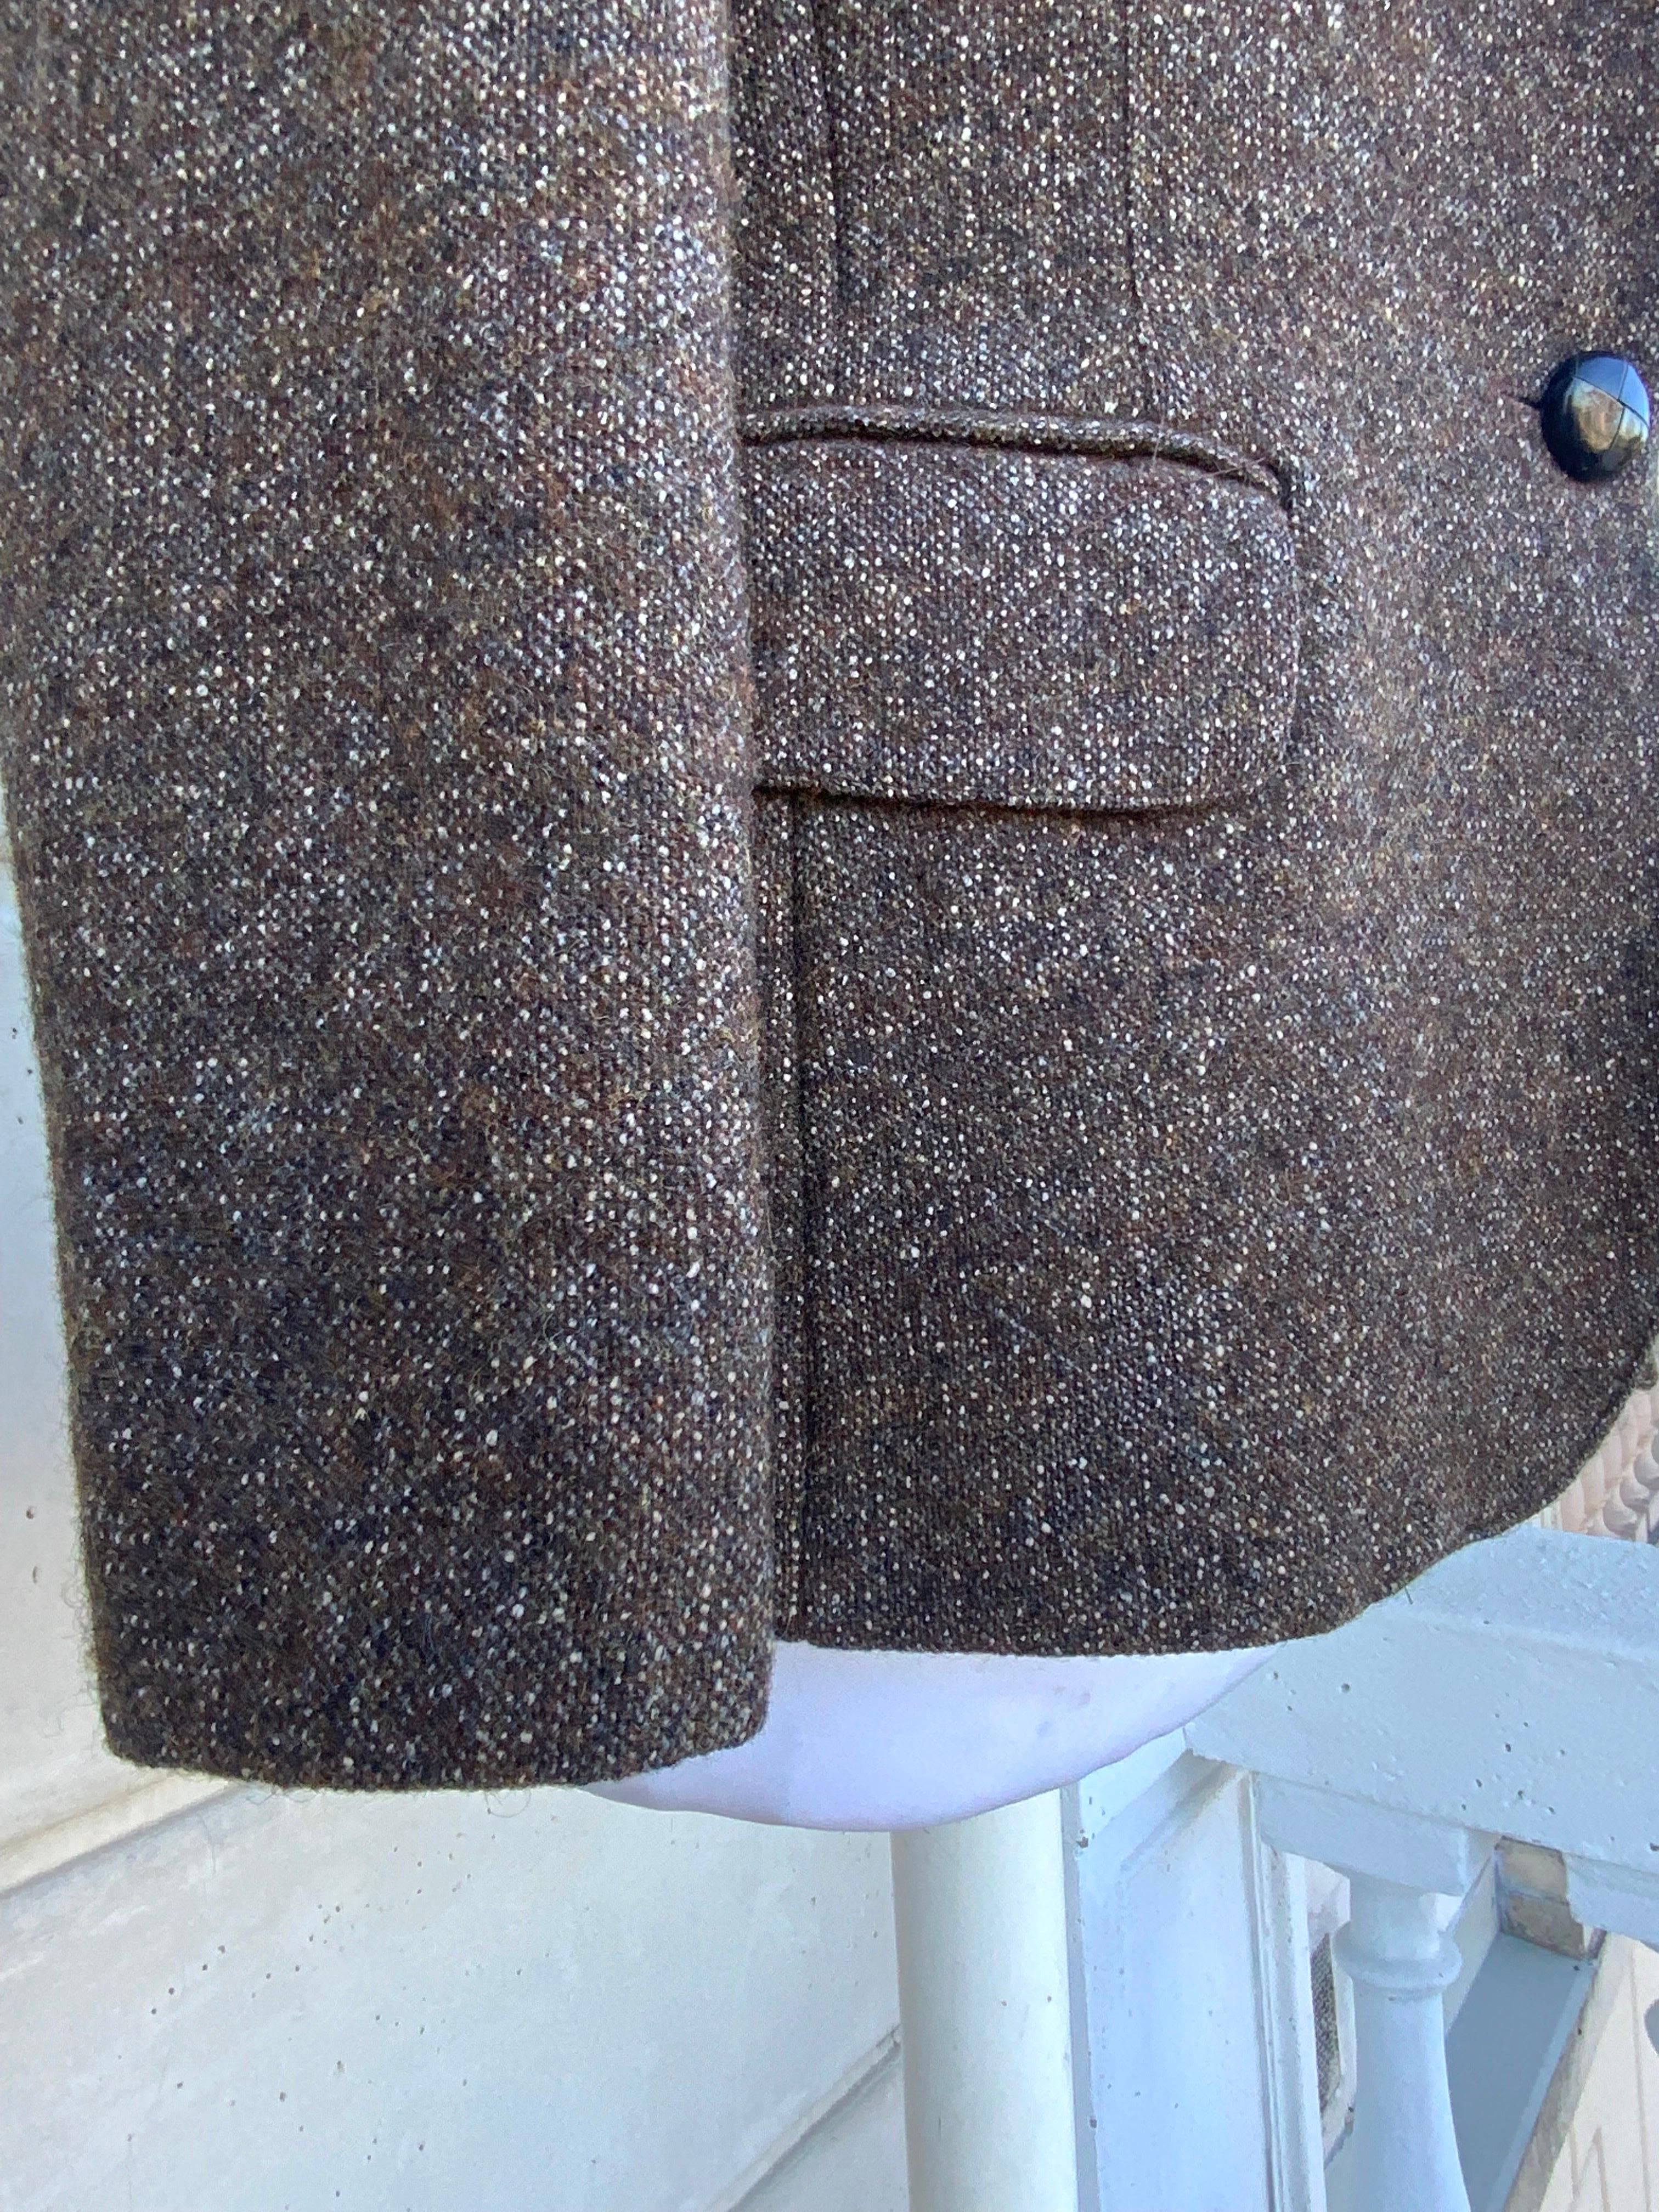 Junio ​​Gaultier blazer with salt and pepper texture on brown. Slim fit, excellent condition
Misure
Lunghezza:65 cm
Spalle:44 cm
Larghezza petto:45 cm
Lunghezza delle maniche:55 cm